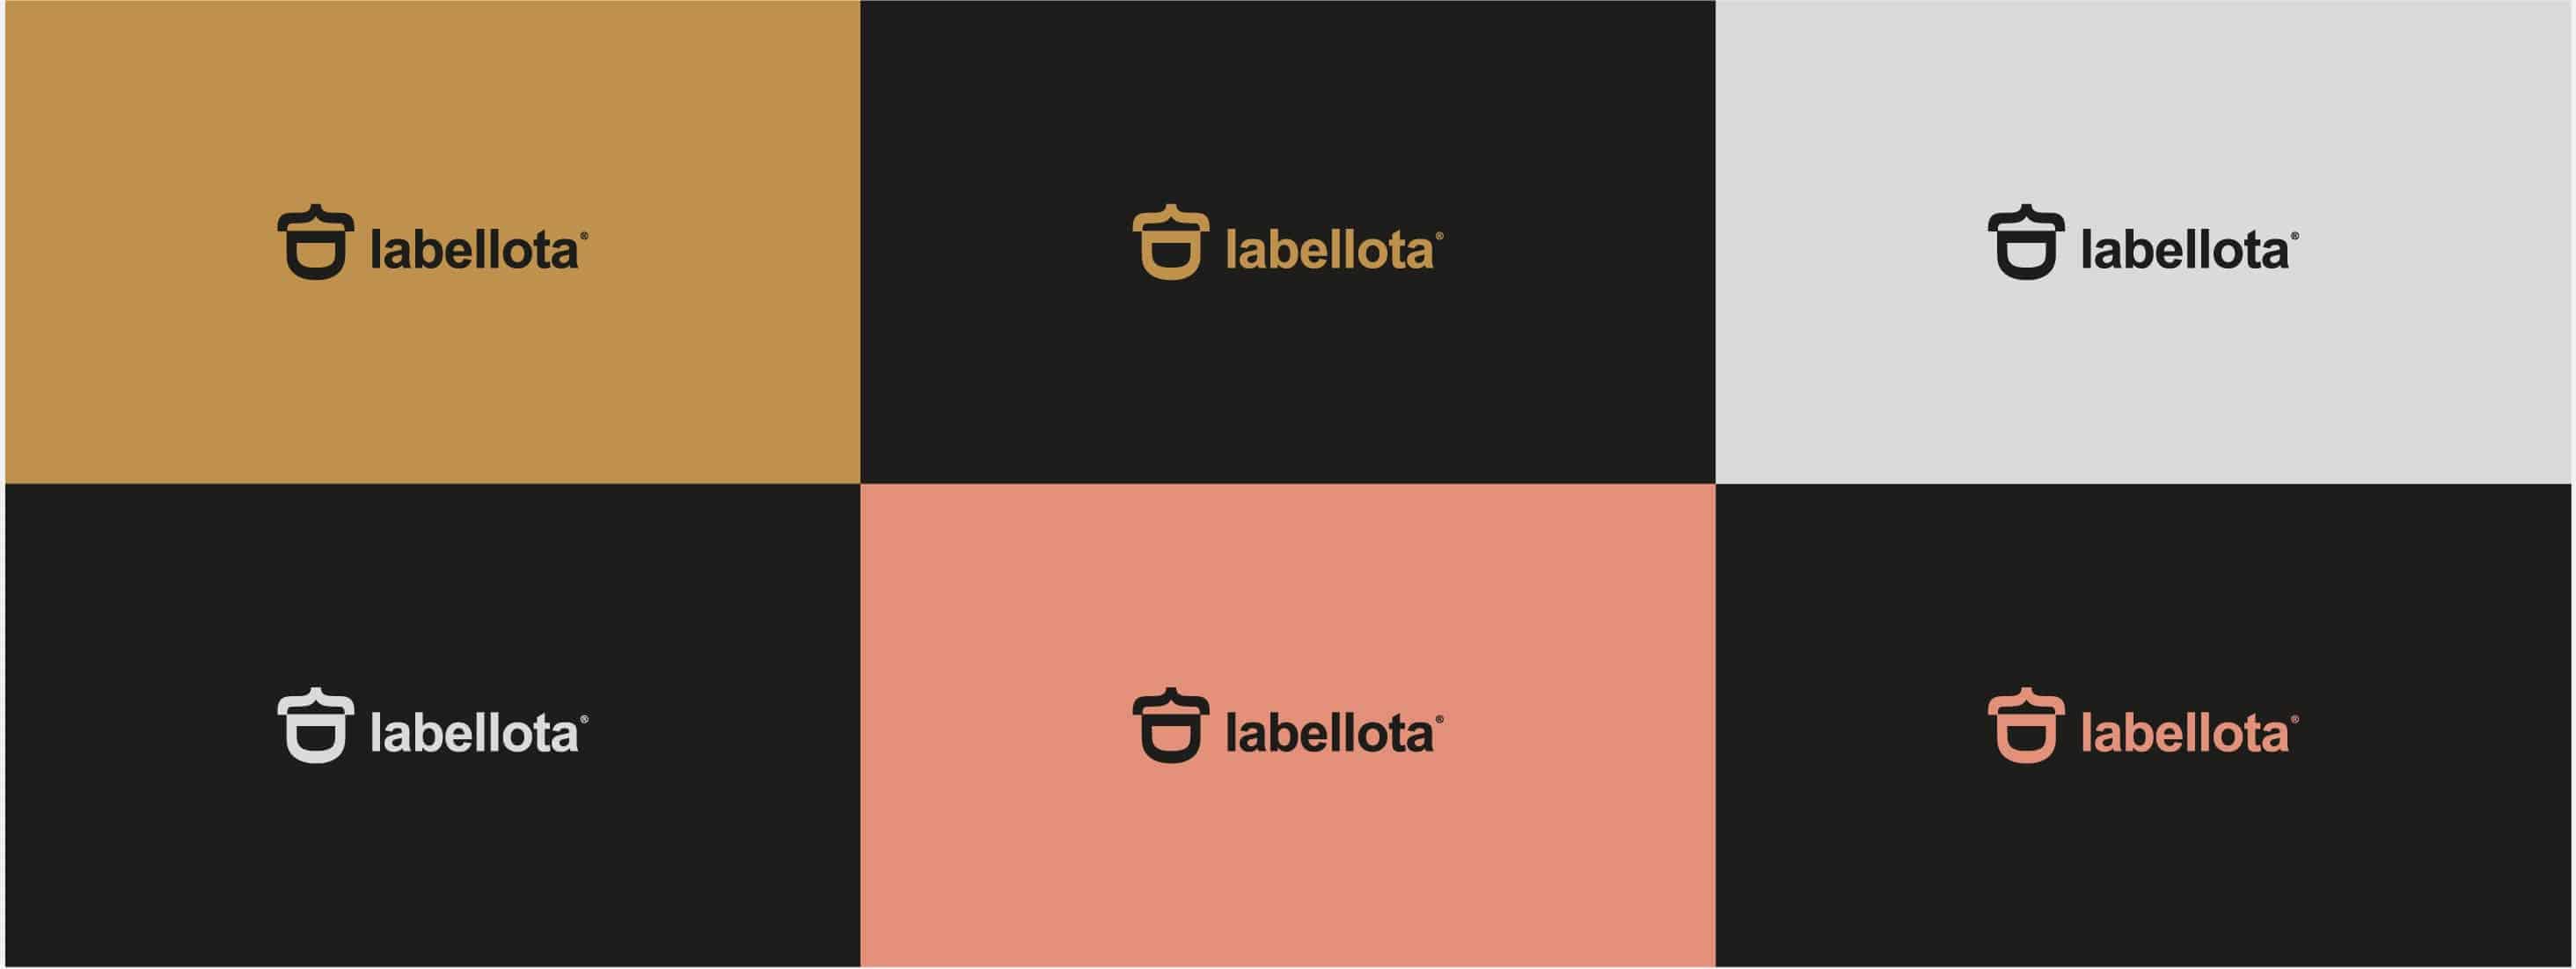 labellota branding